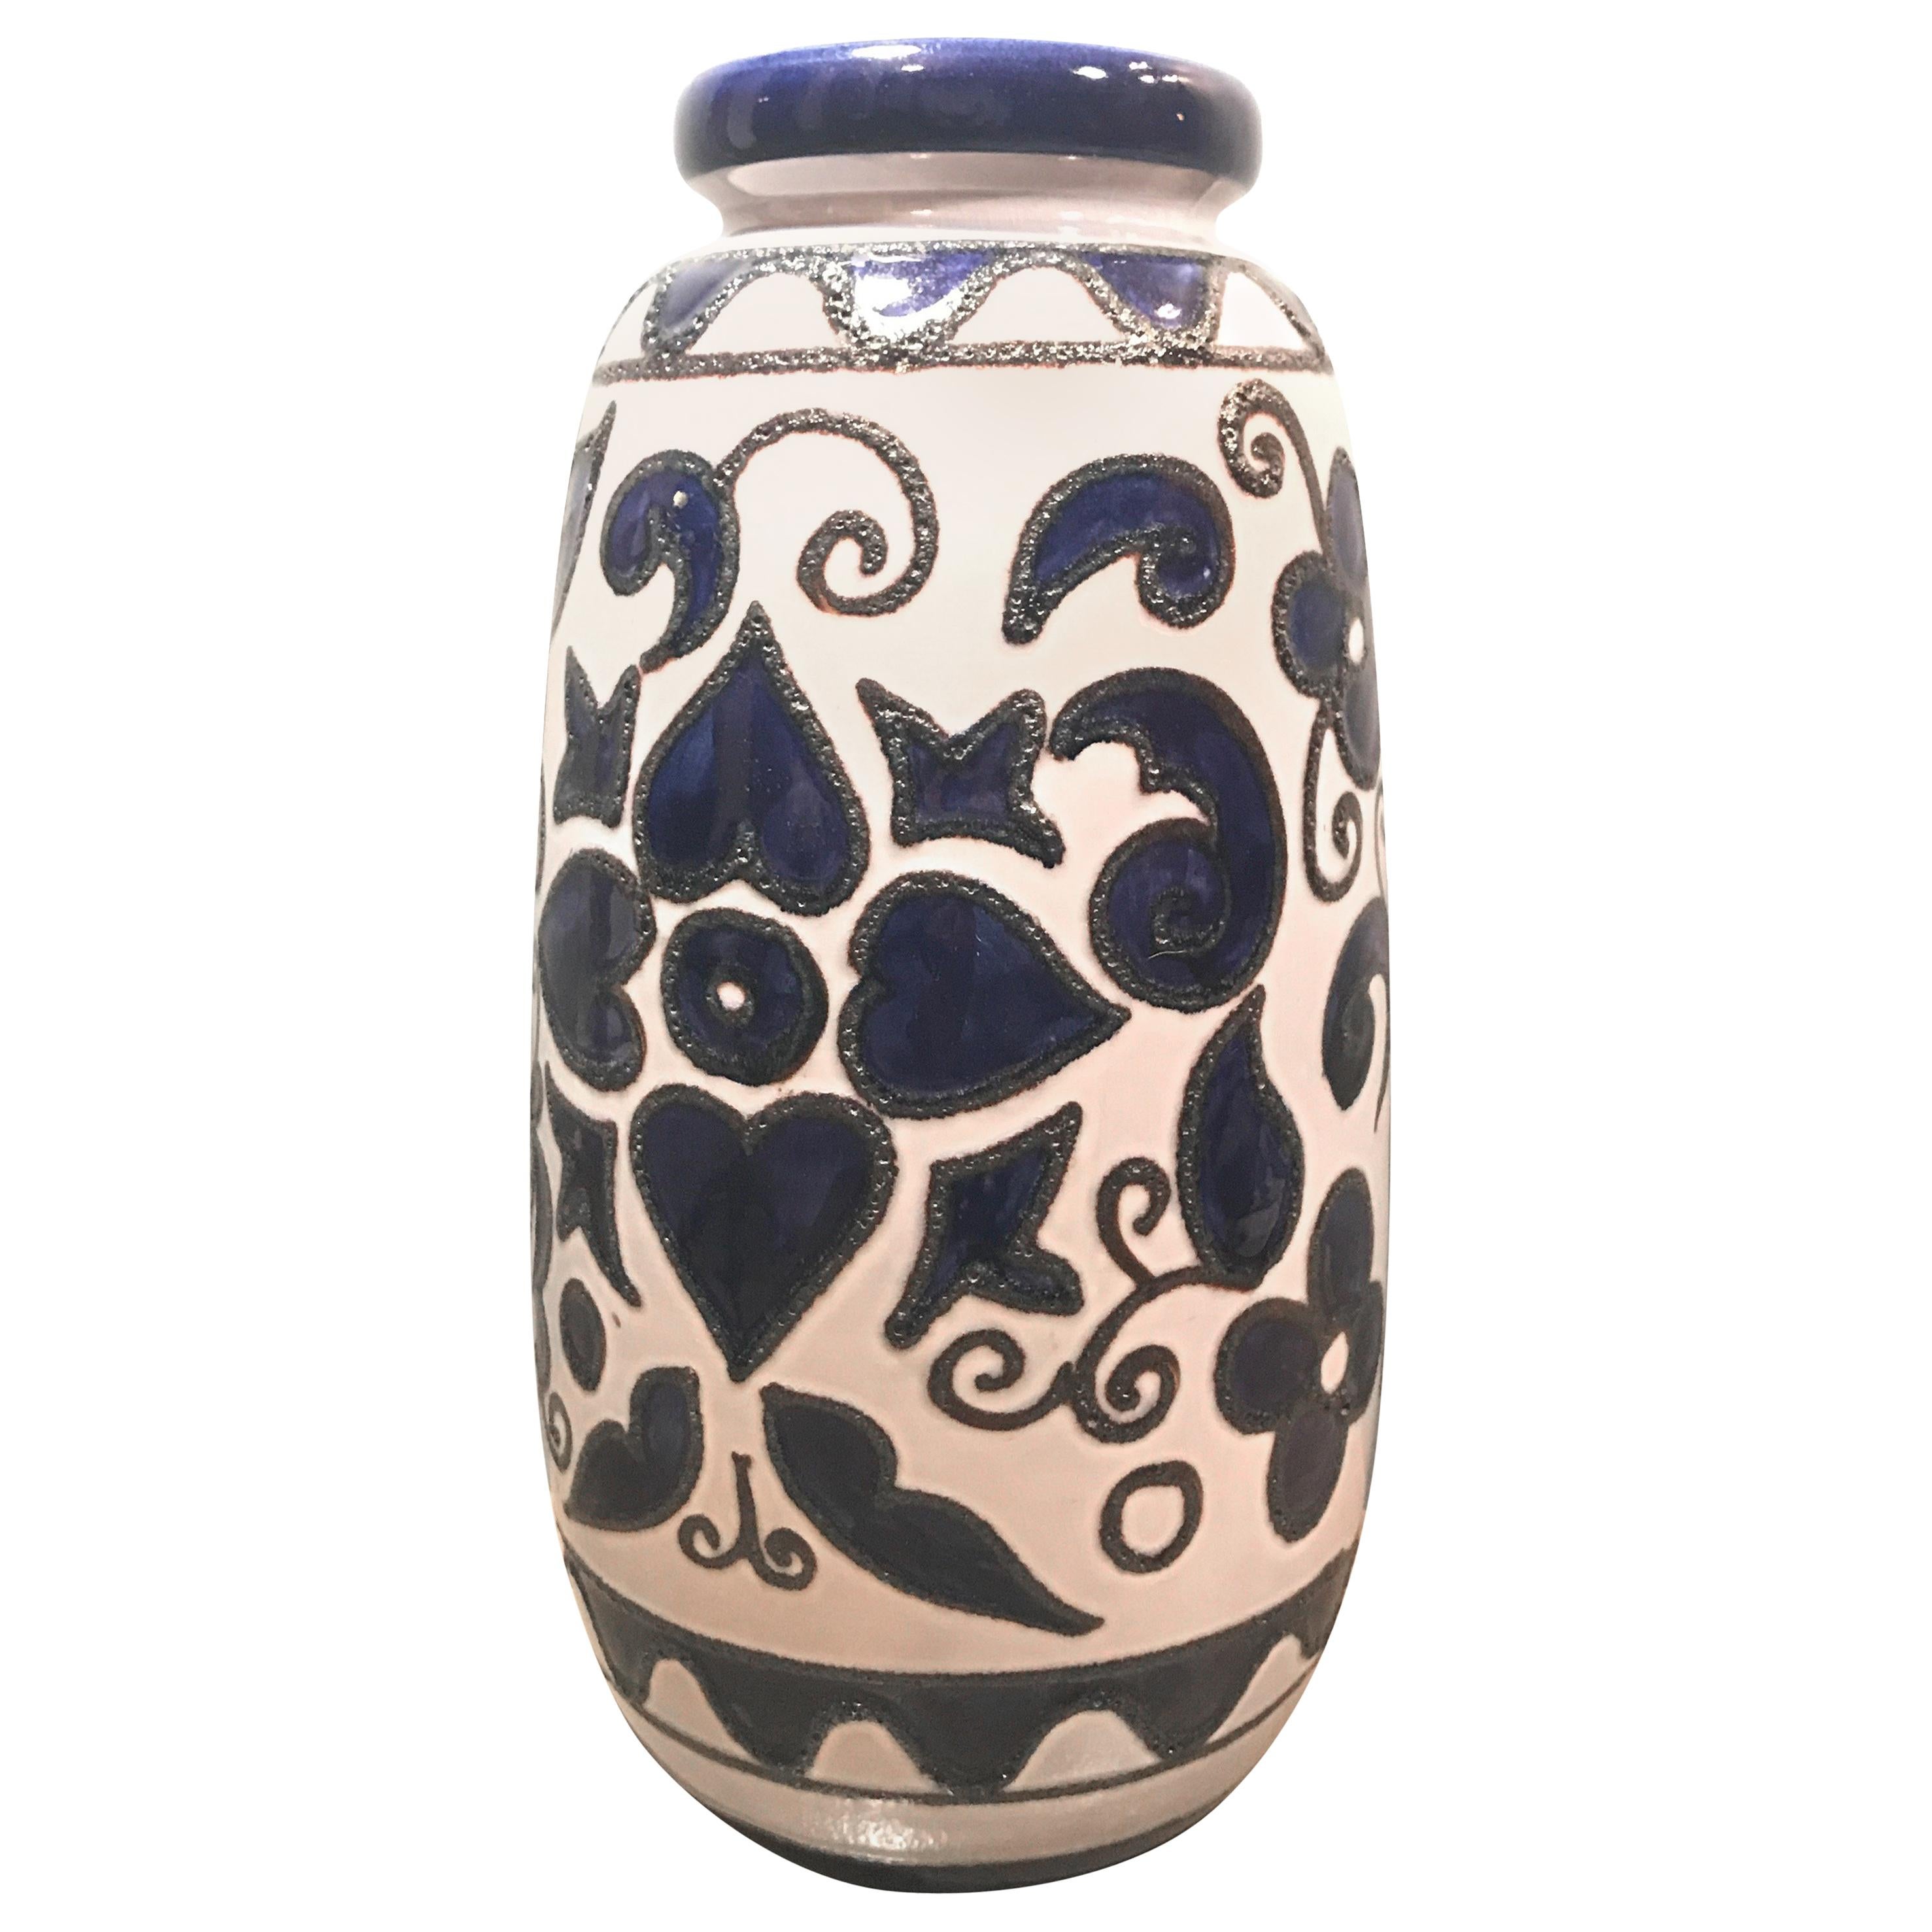 Vintage West German Ceramic Art Vase from the 1970s